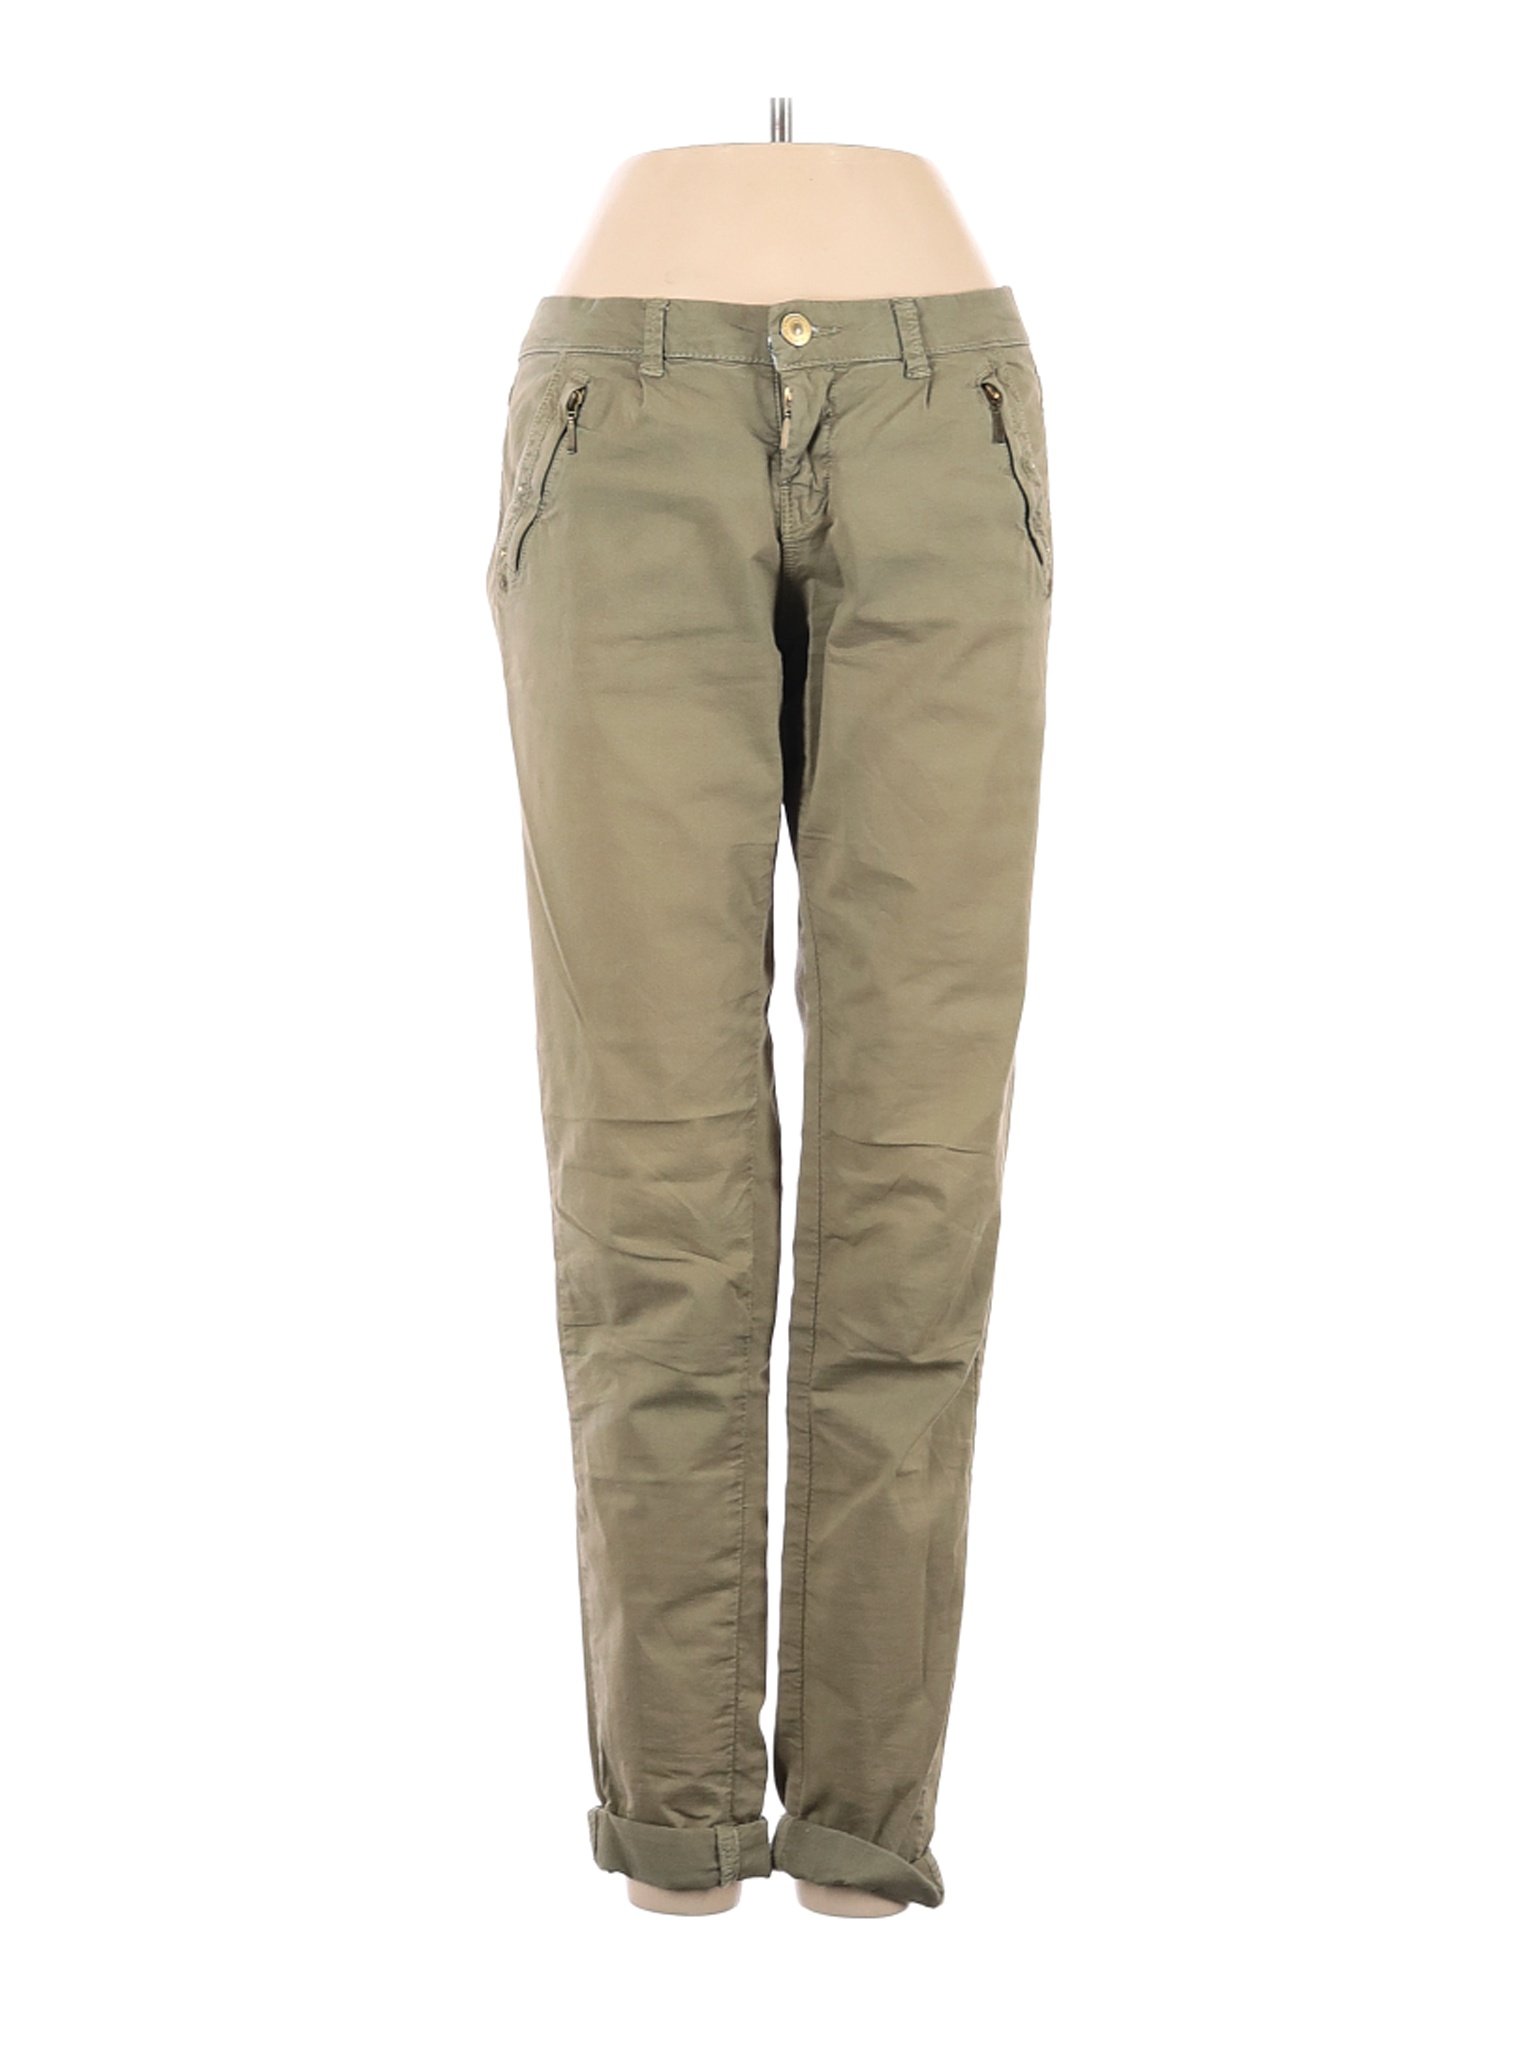 Bershka Women Green Casual Pants 36 eur | eBay